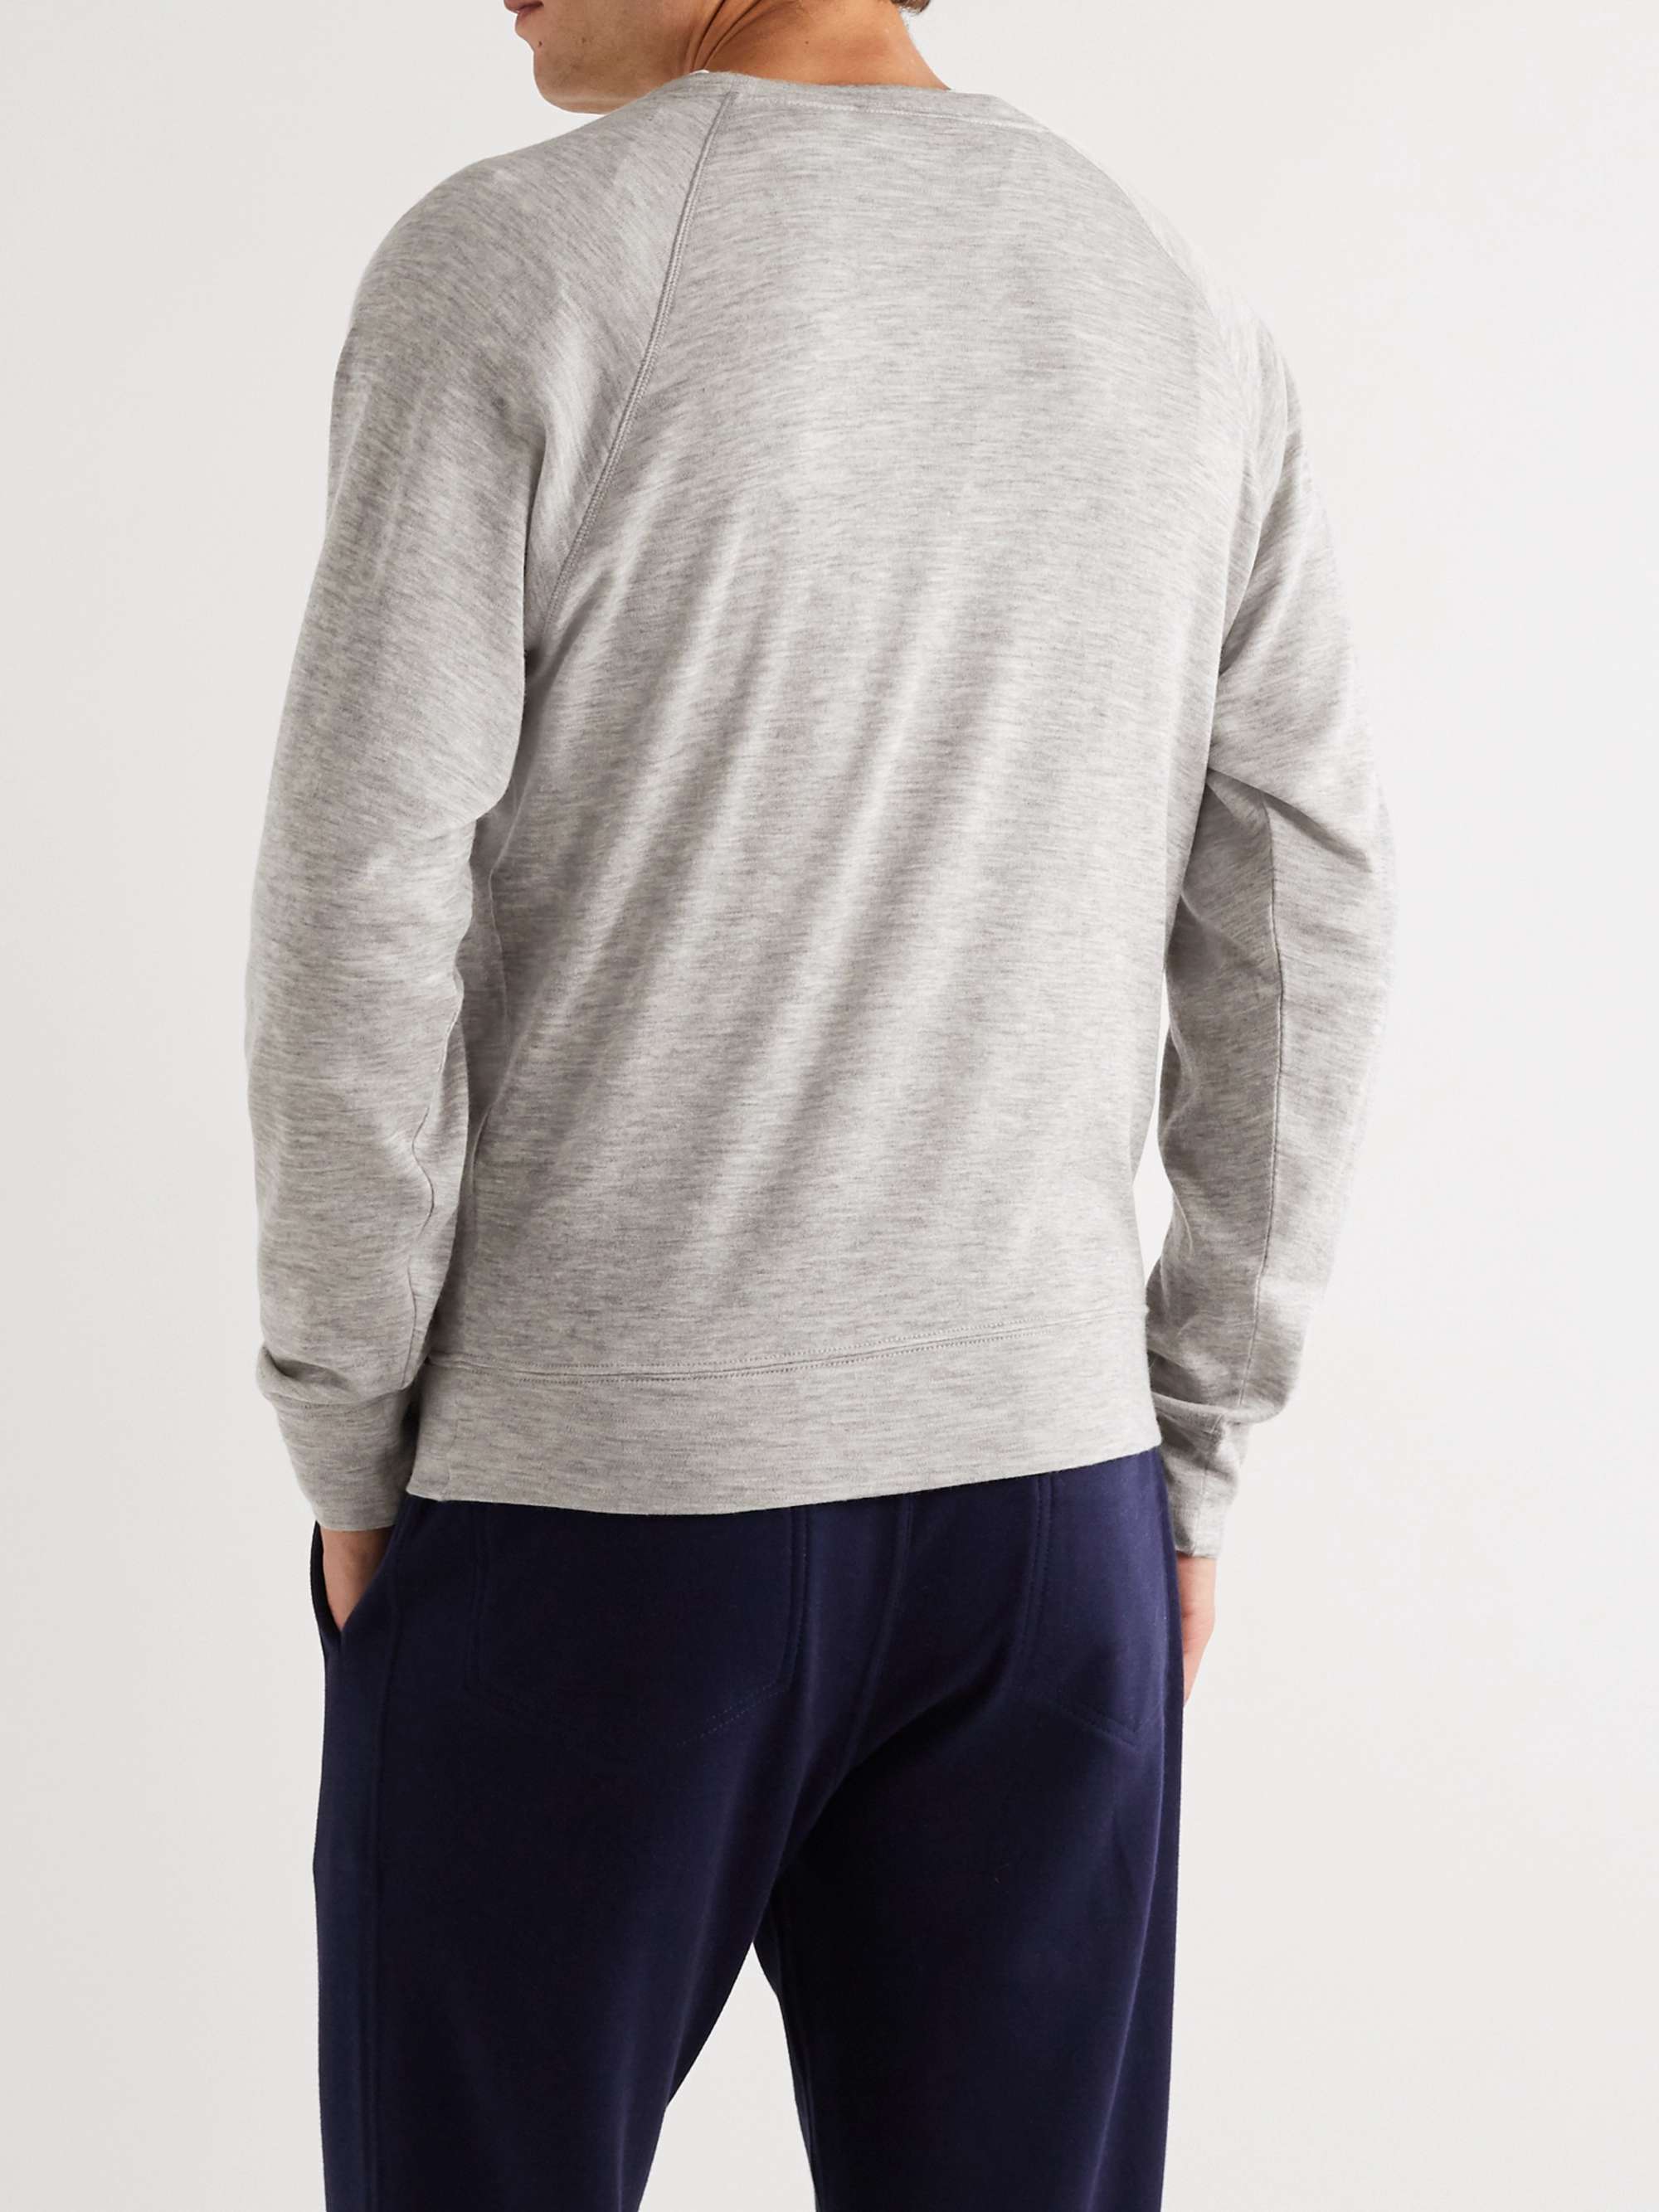 TOM FORD Slim-Fit Mélange Cashmere-Jersey Sweater